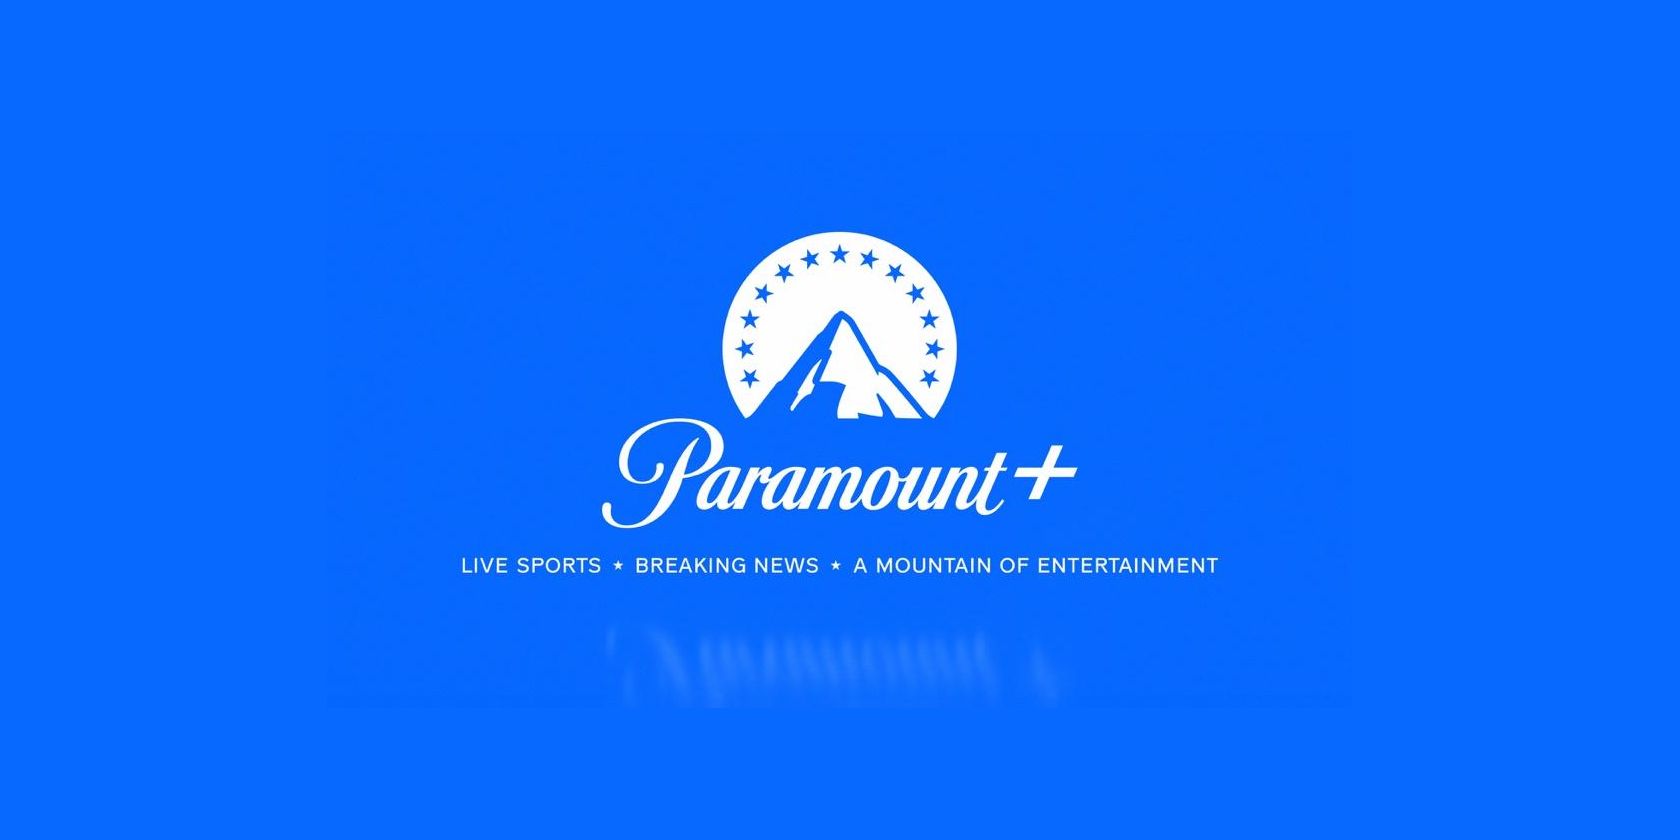 paramount plus - CBS All Access si rinnova come Paramount +